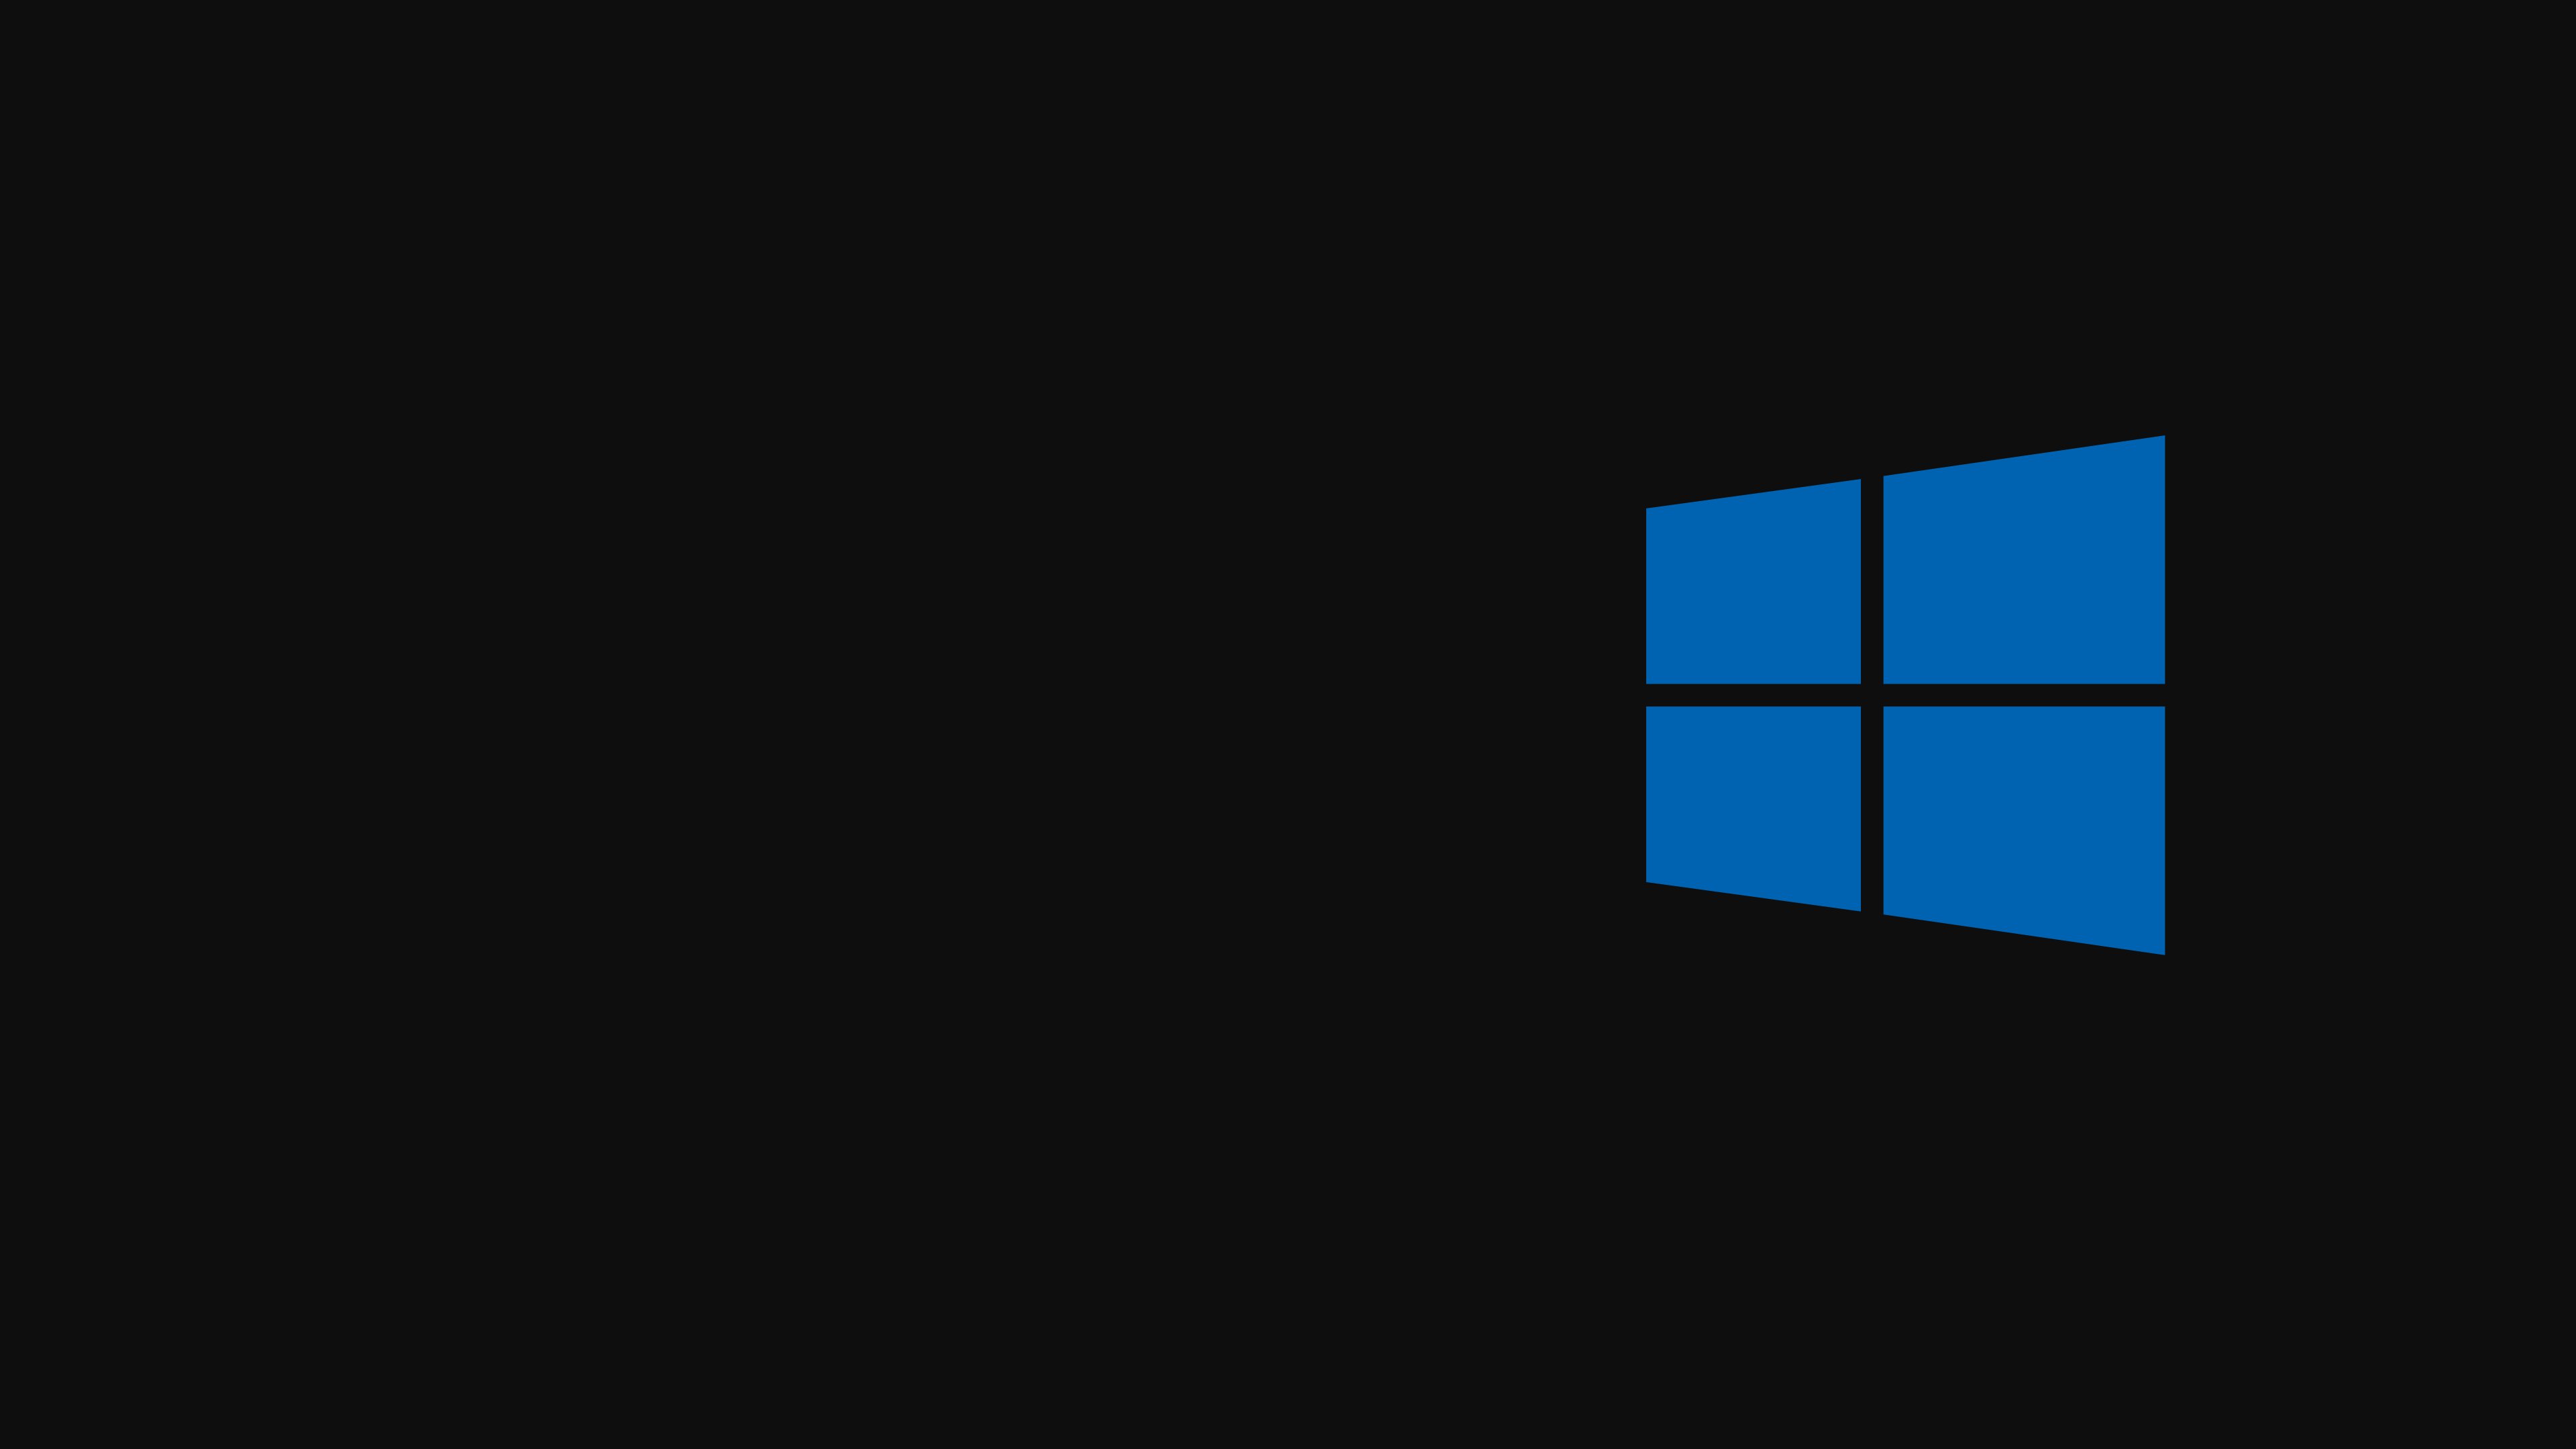 Windows 10 Dark Modern 4k Wallpaper (3840 x 2160)